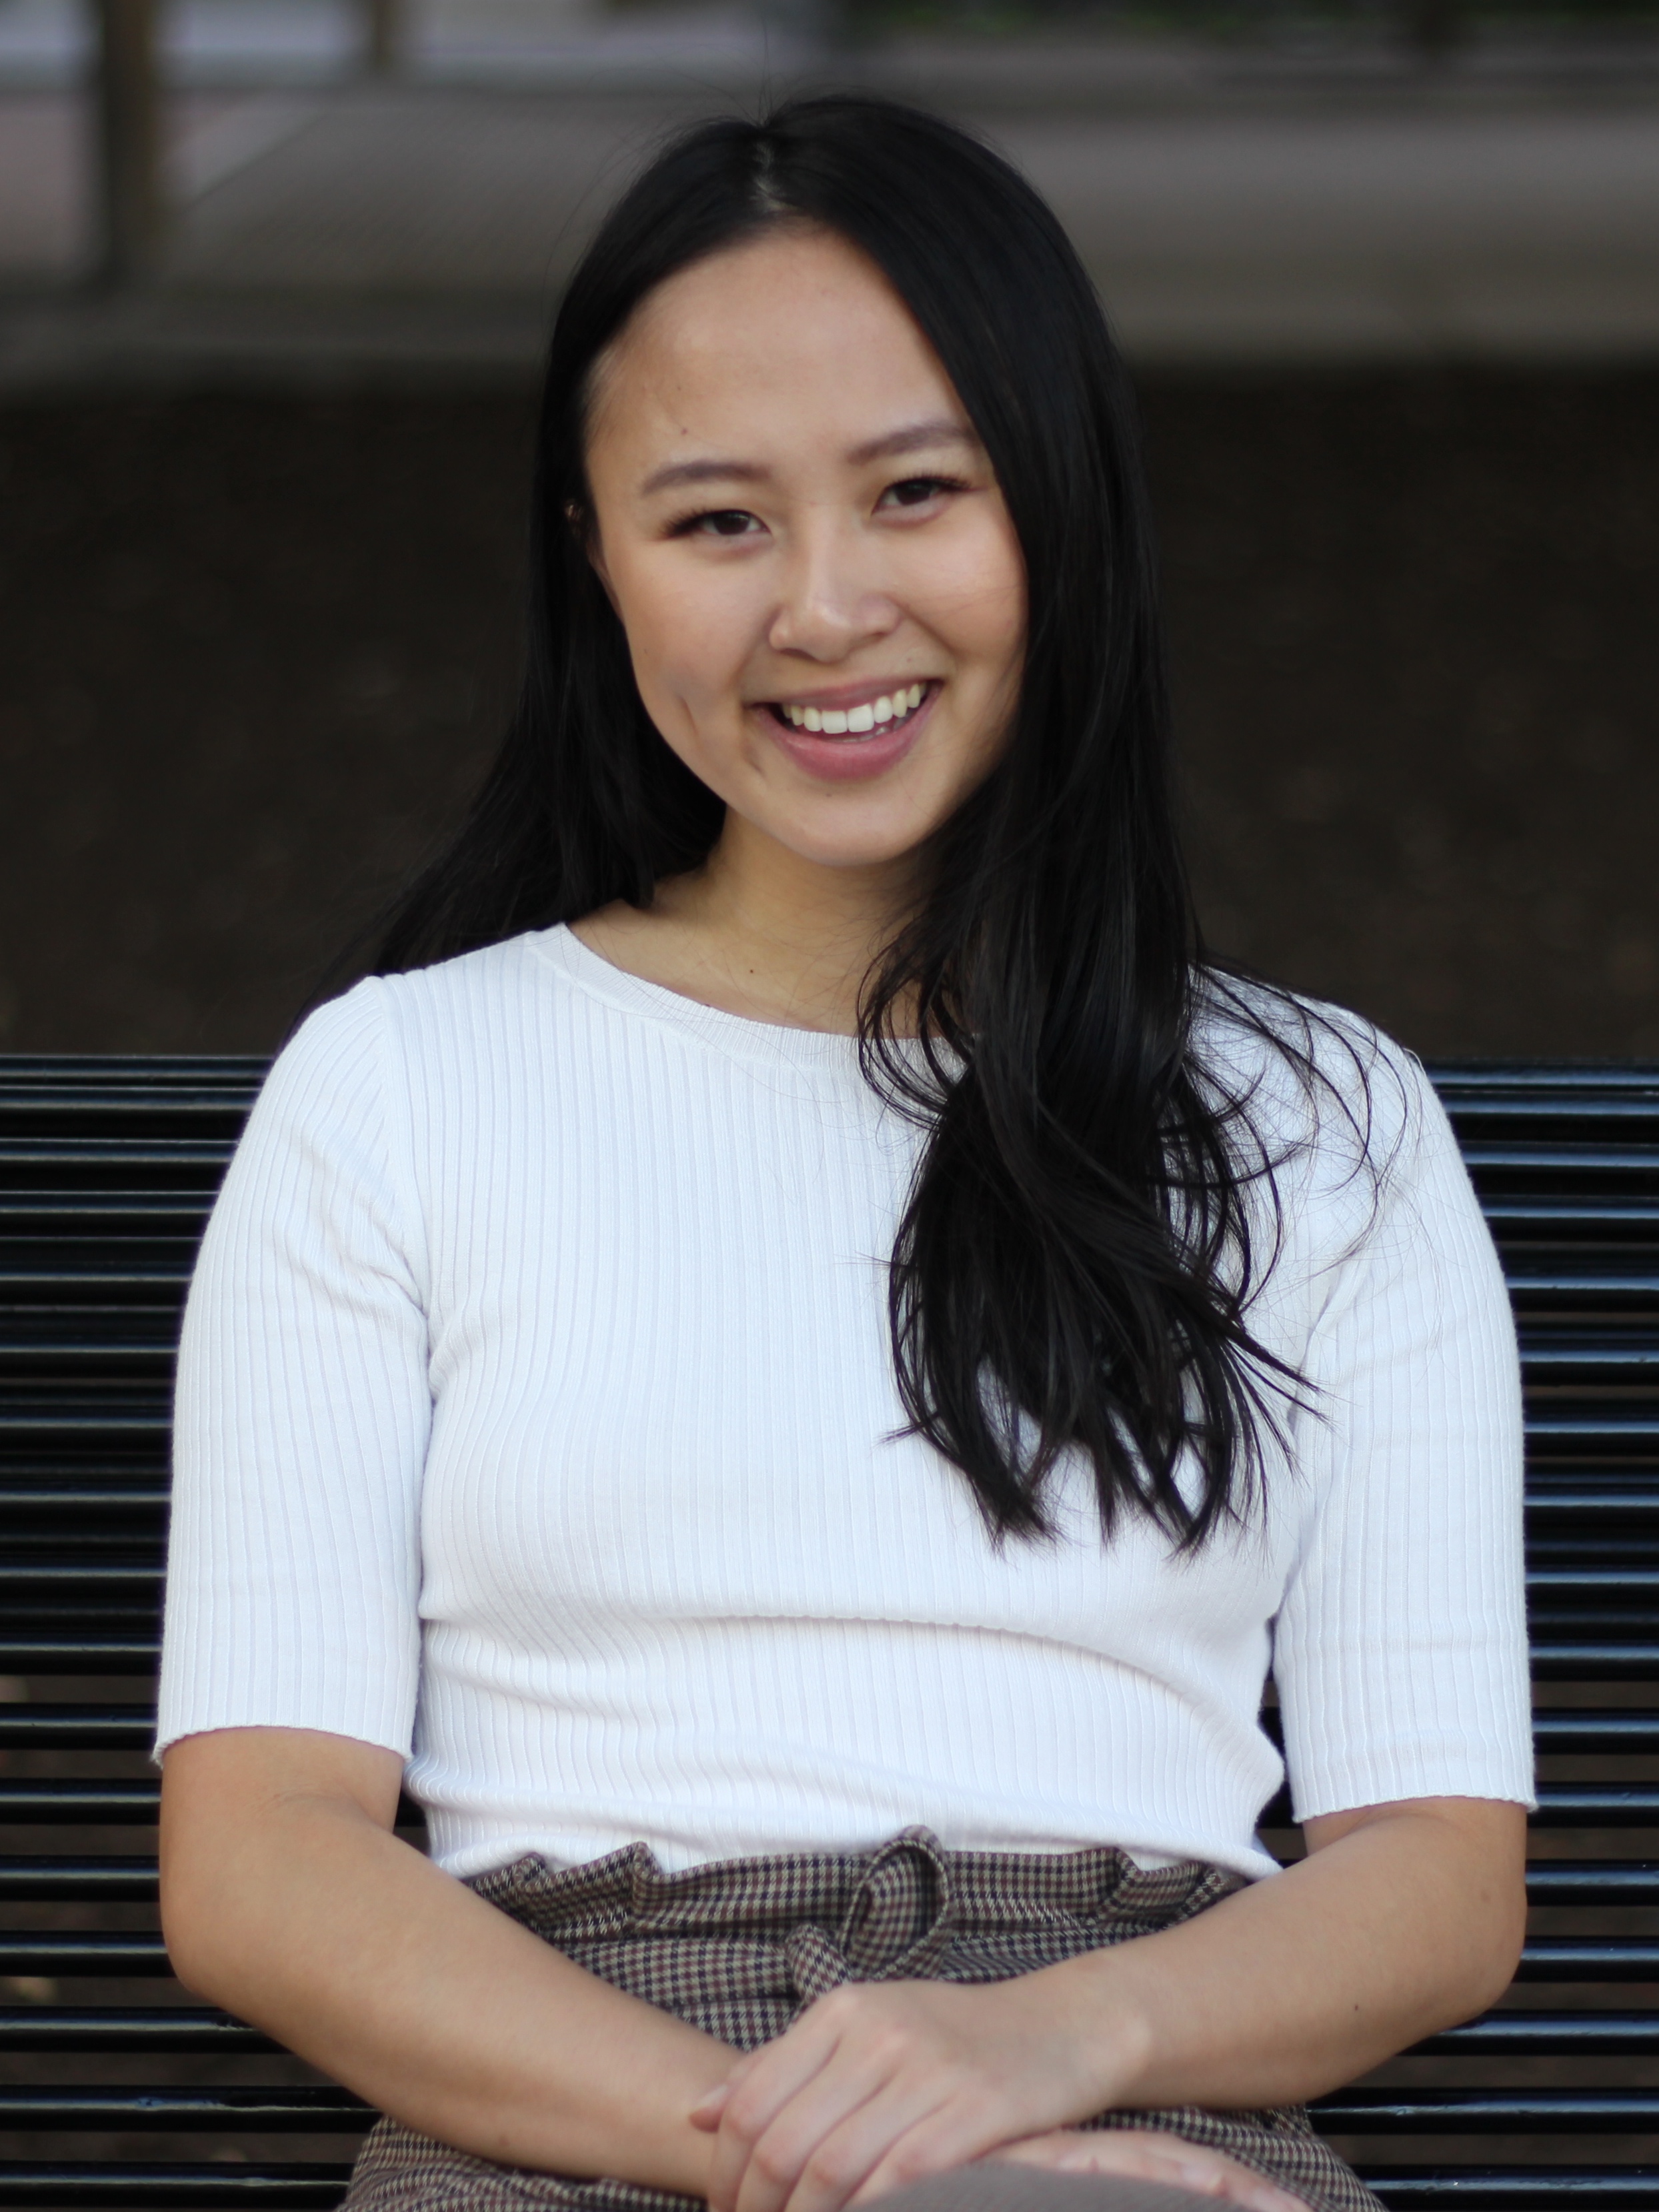 Wendy Nguyen, Web Developer for Cakes for BLM - Based in Houston, Texas